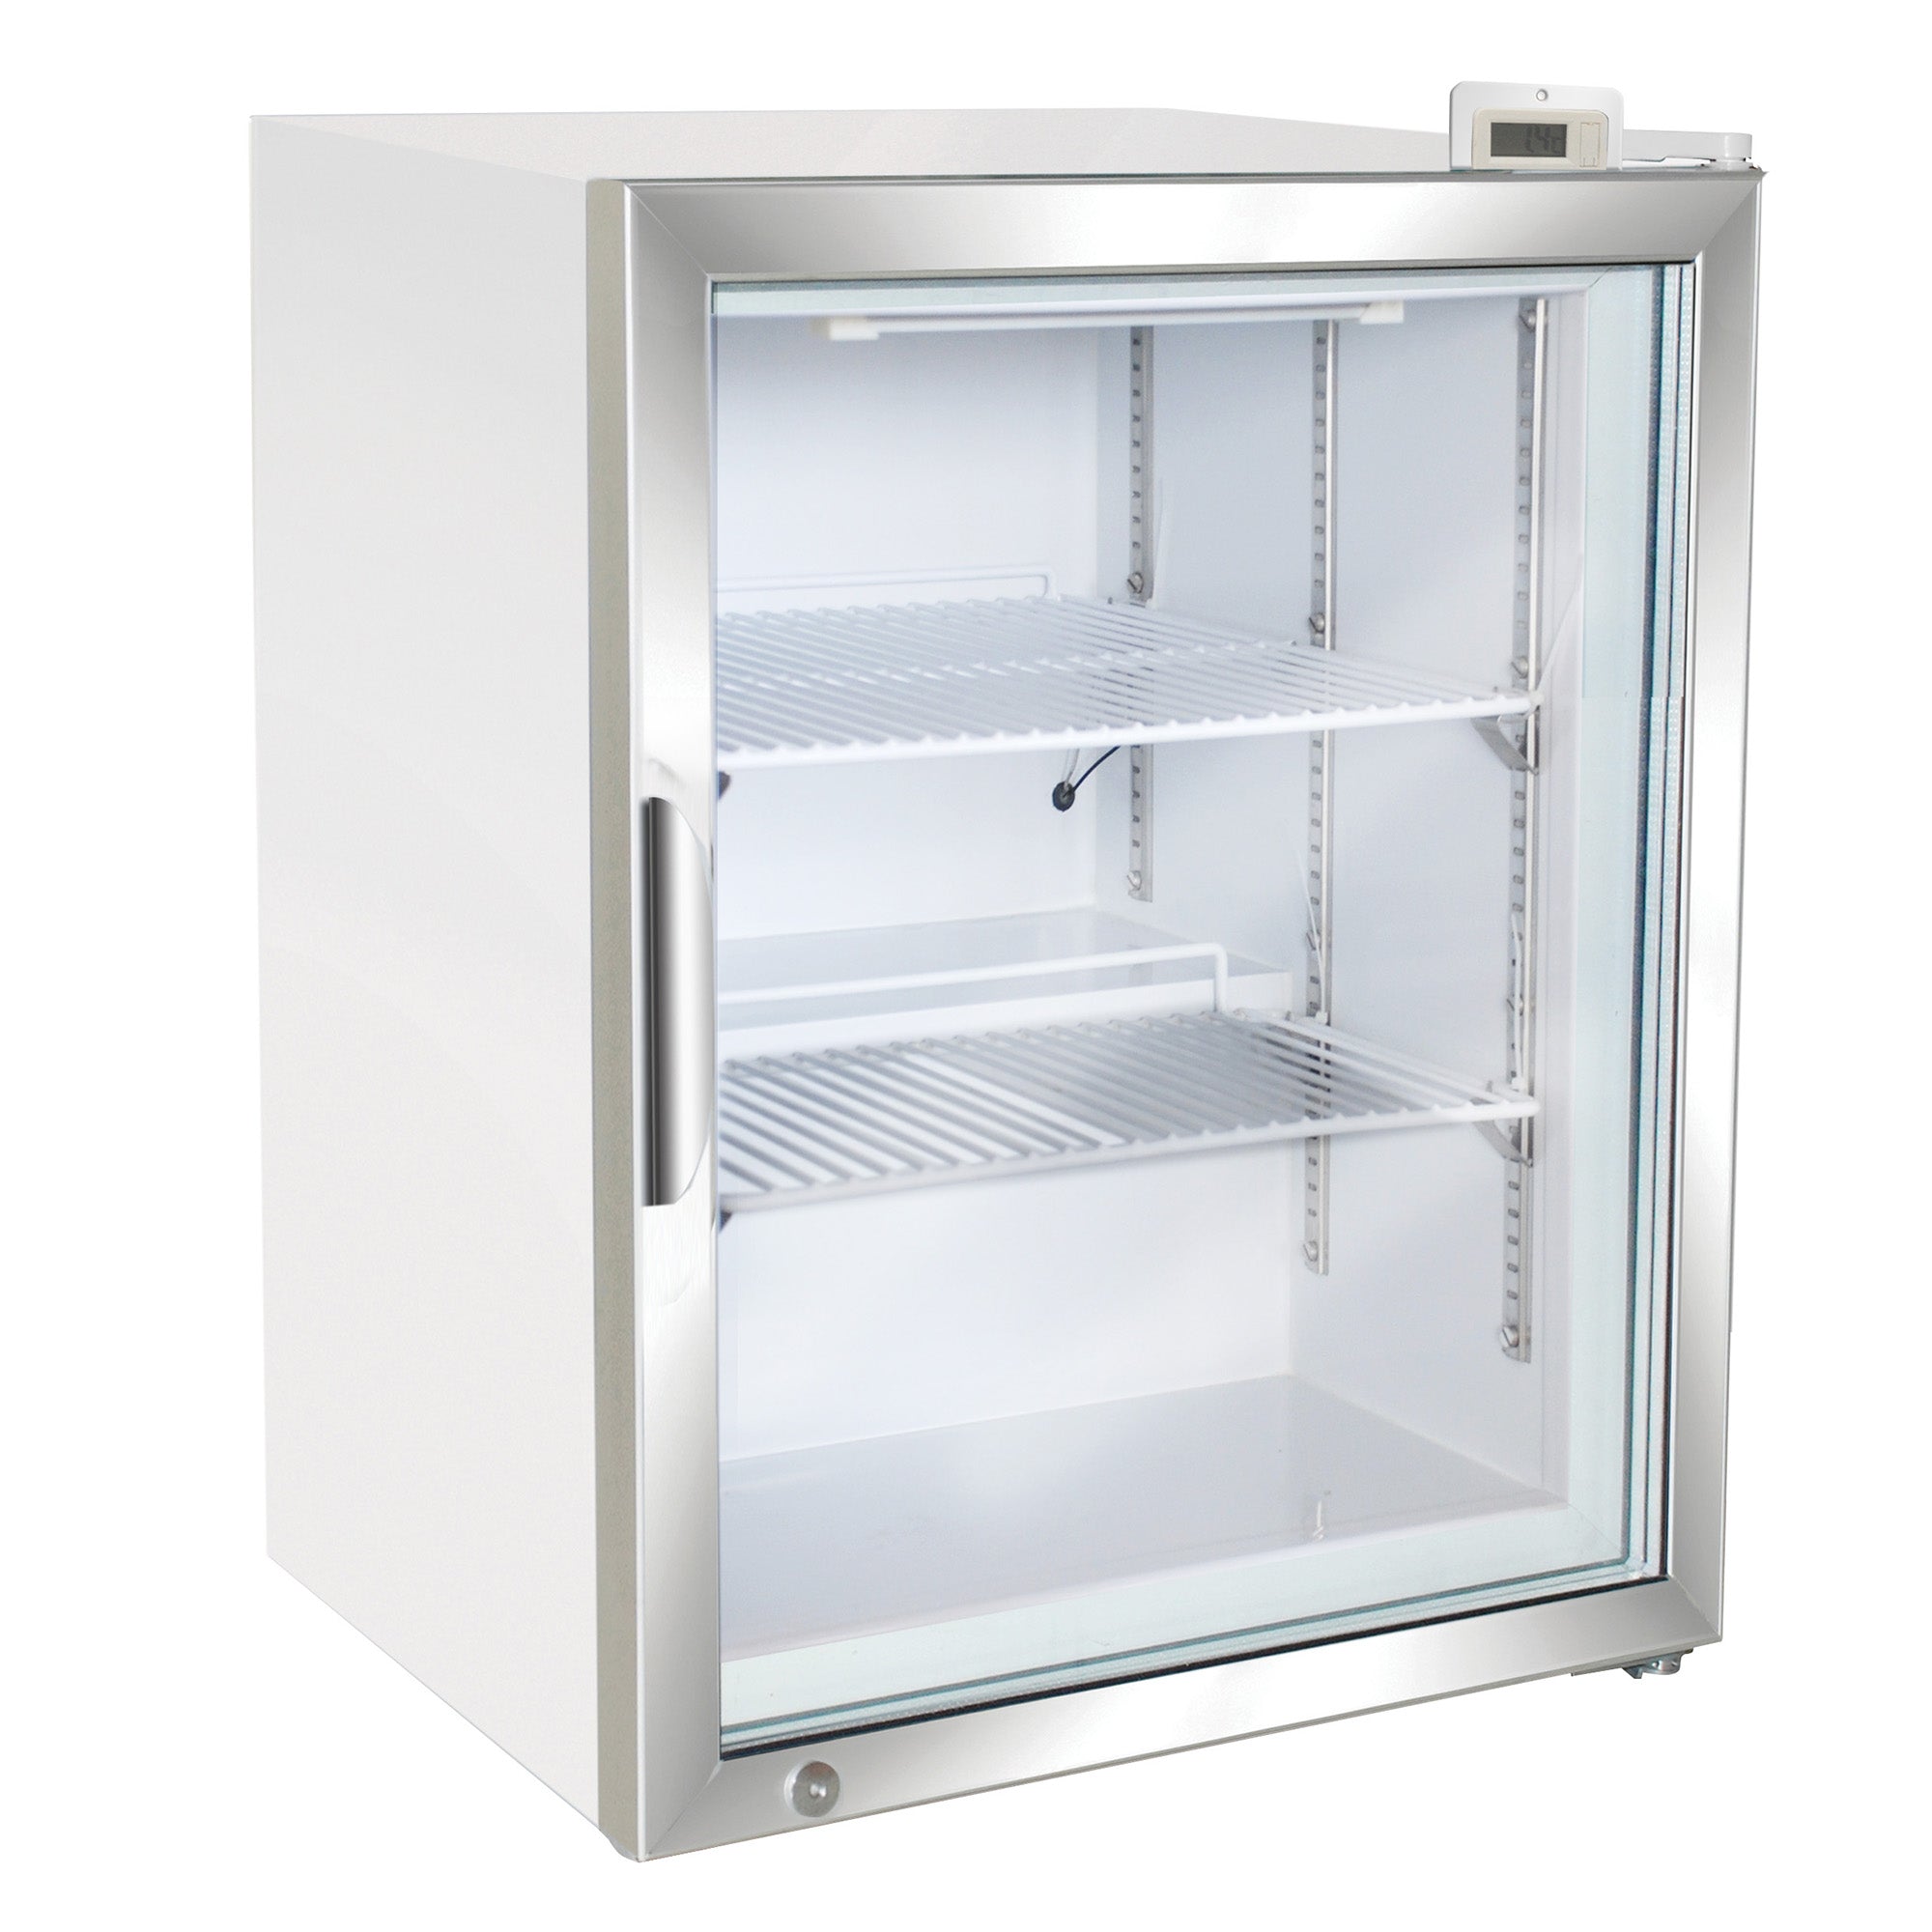 Maxx Cold - MXM1-3.5FHC, Maxx Cold Merchandiser Freezer, Countertop, 24.4"W, 3.5 cu. ft. Storage Capacity, in White